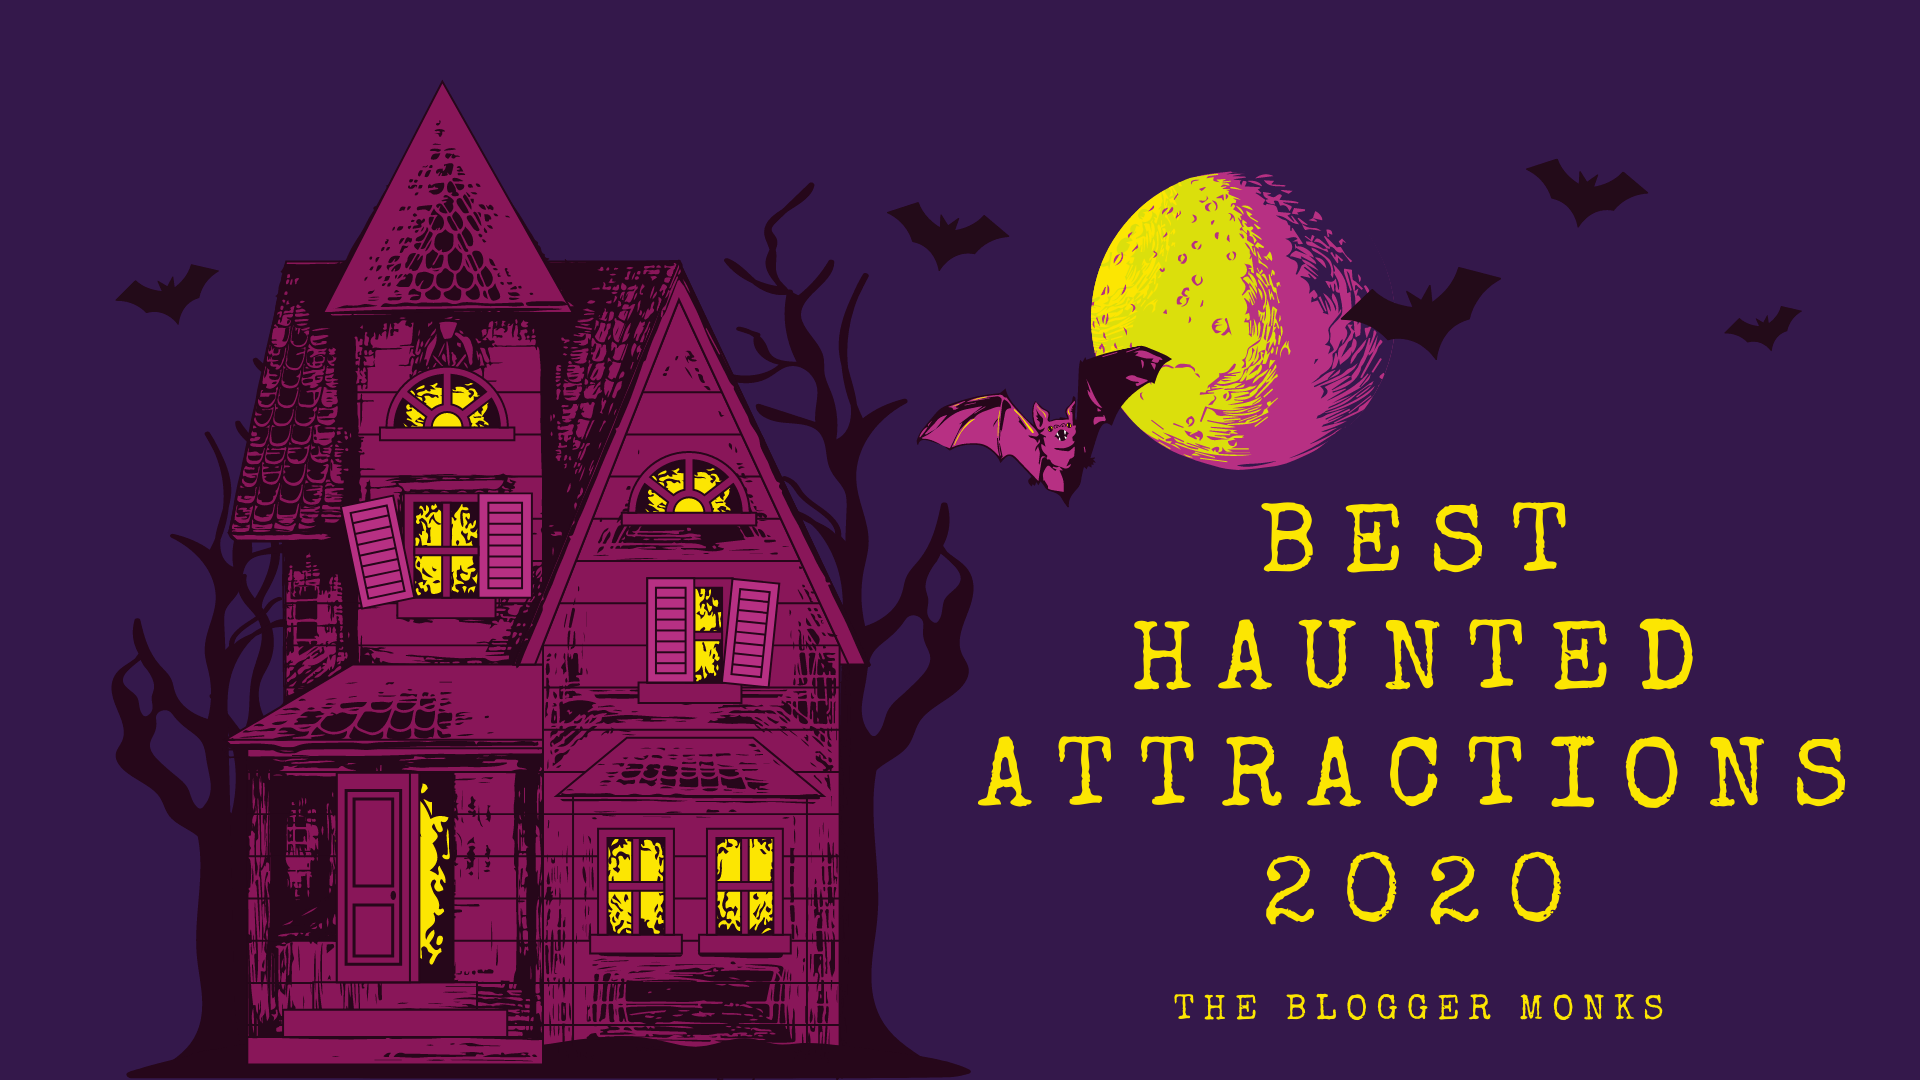 Best haunted attractions 2020